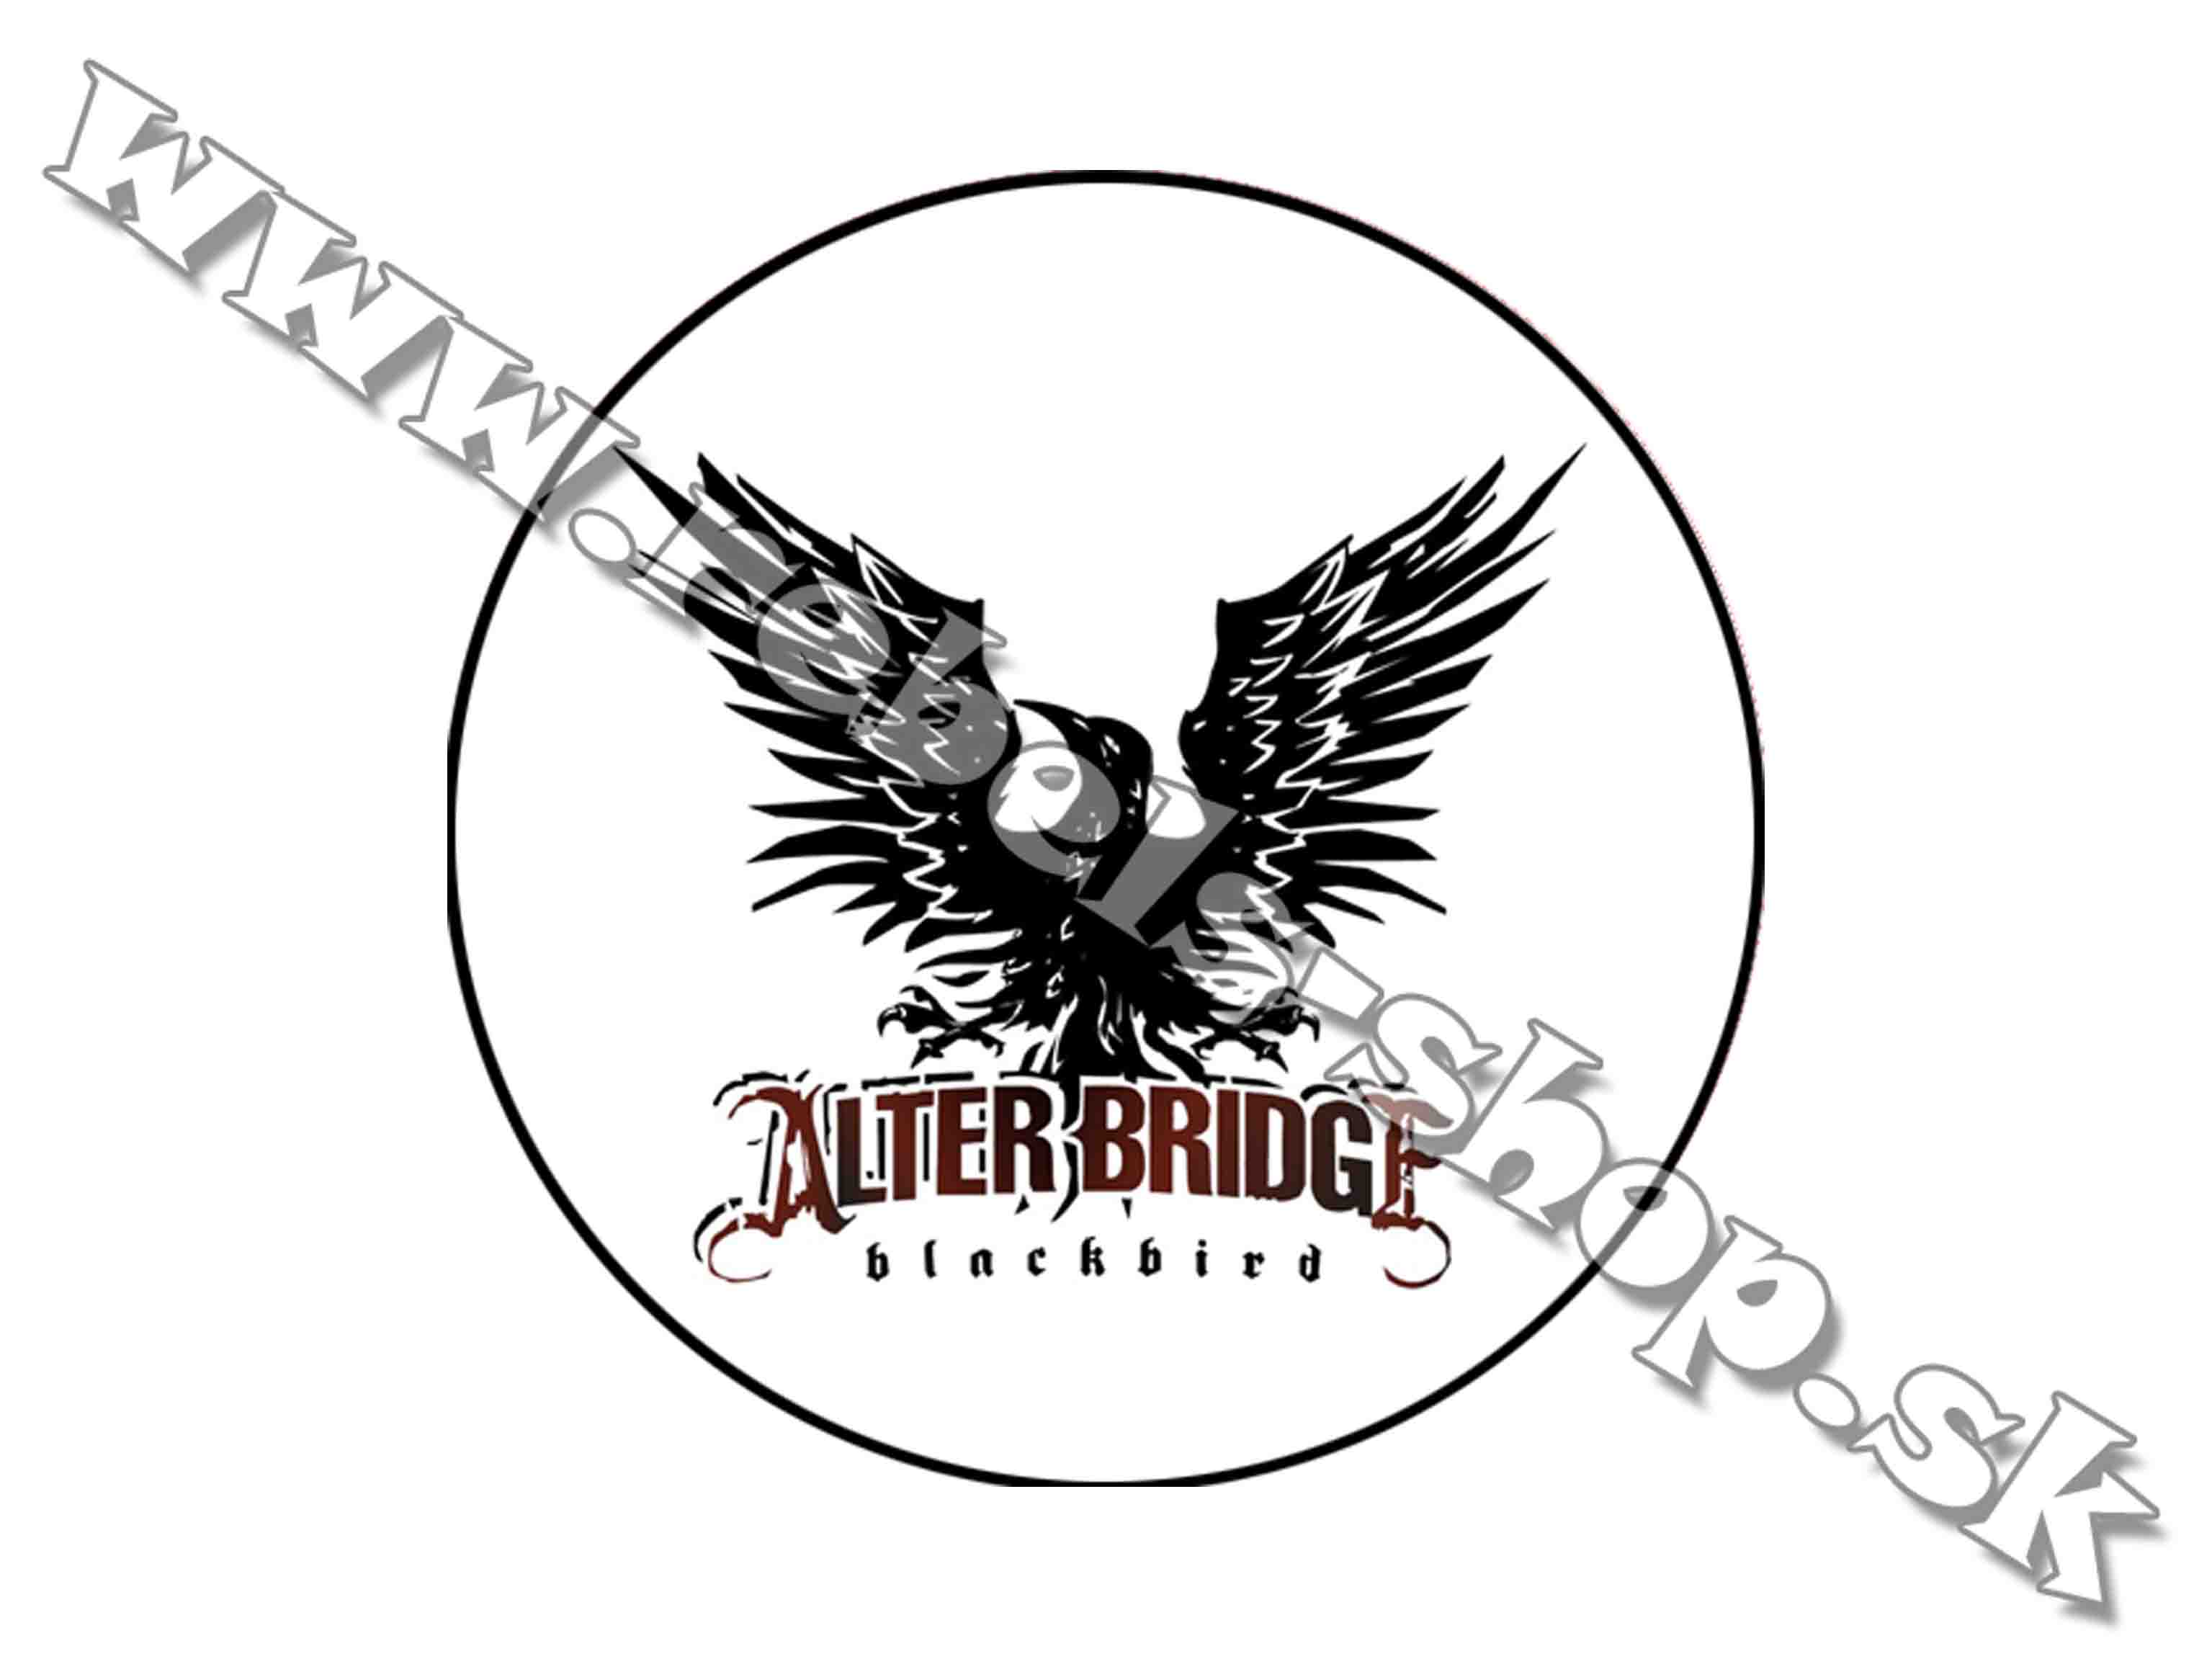 Odznak "Alter Bridge"